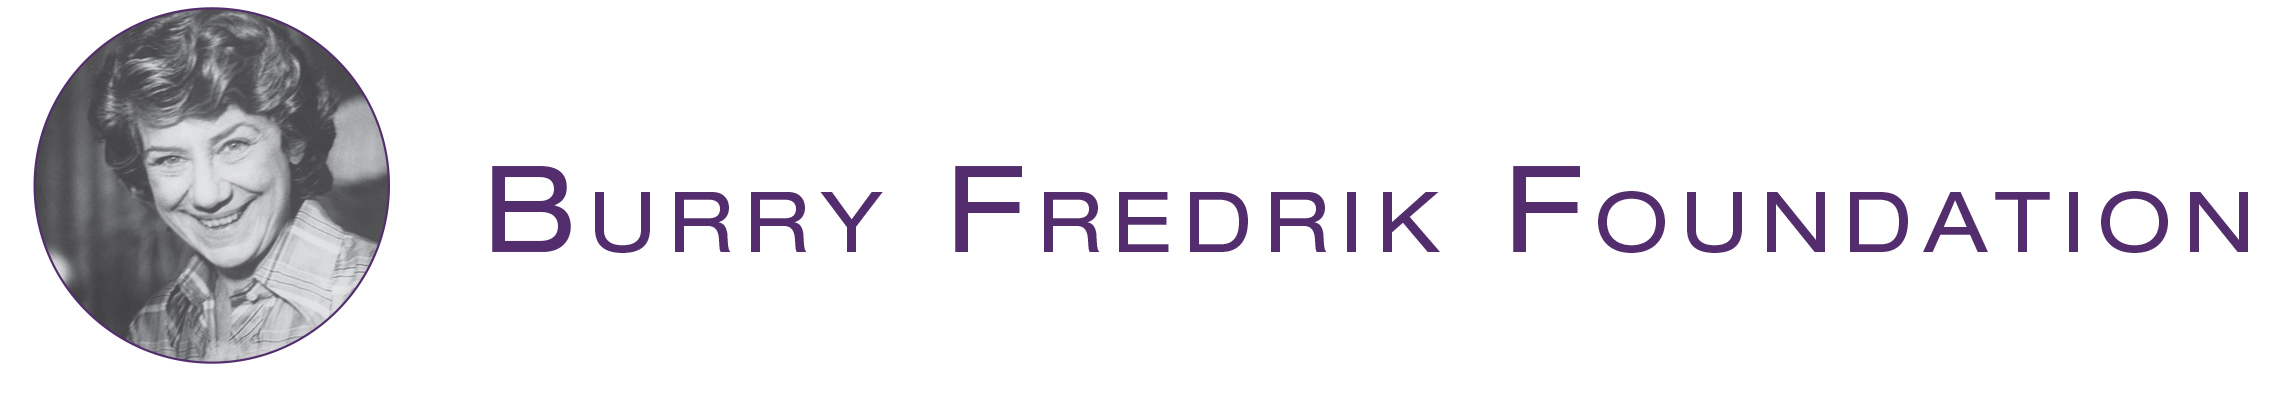 Burry Fredrik Foundation